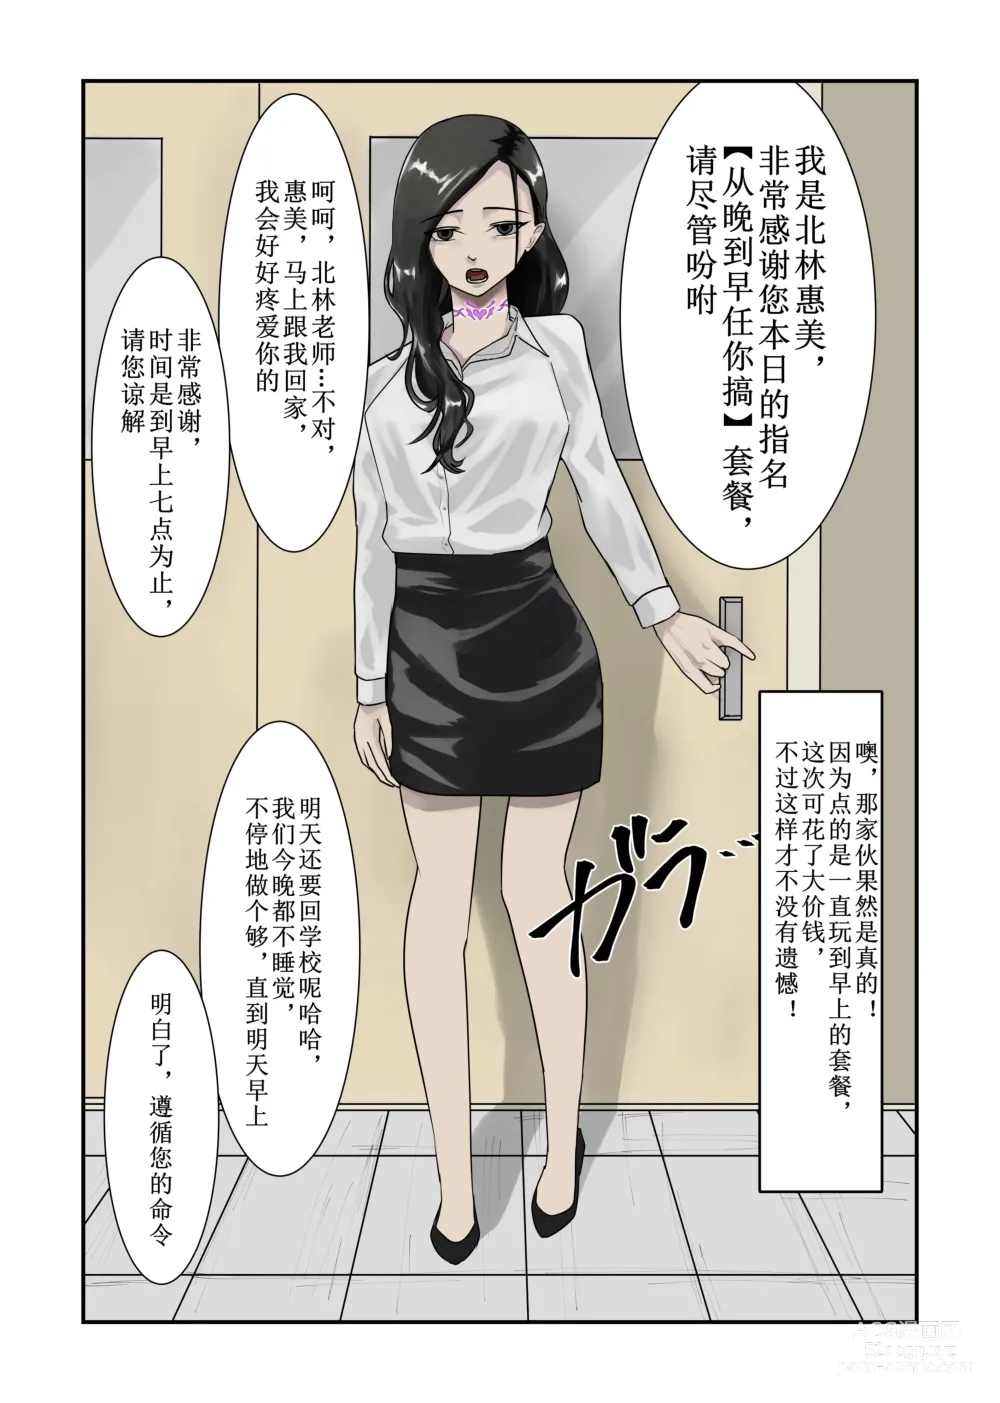 Page 1 of doujinshi bizin no douryou onnakyousi ni sennou irai suru hanasi 委托对美女教师同事洗脑的故事